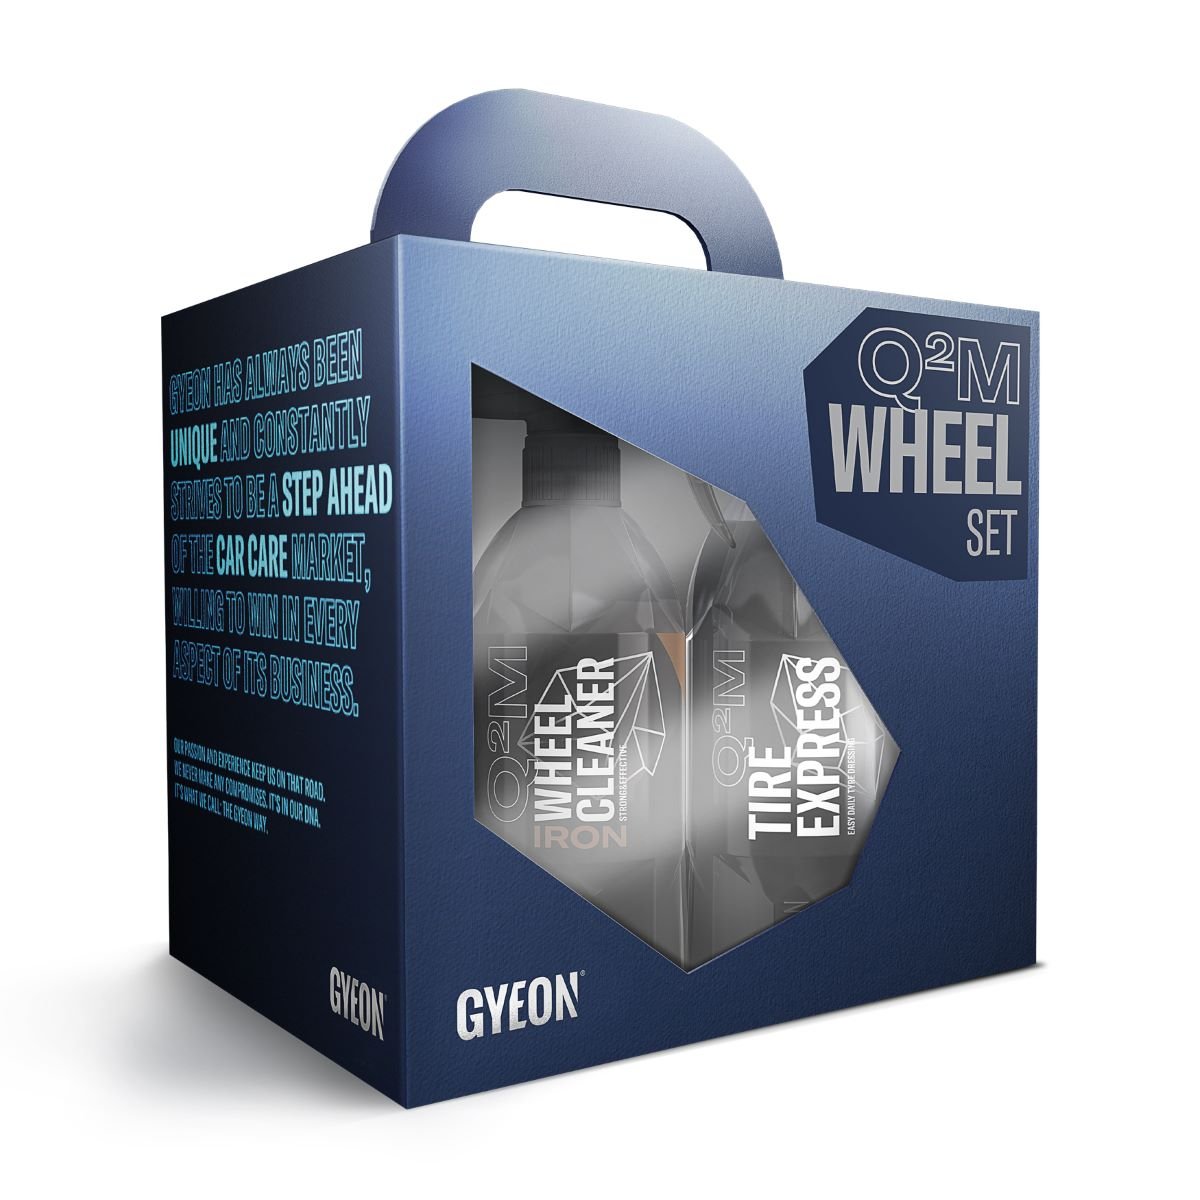 Q²M Wheel Set